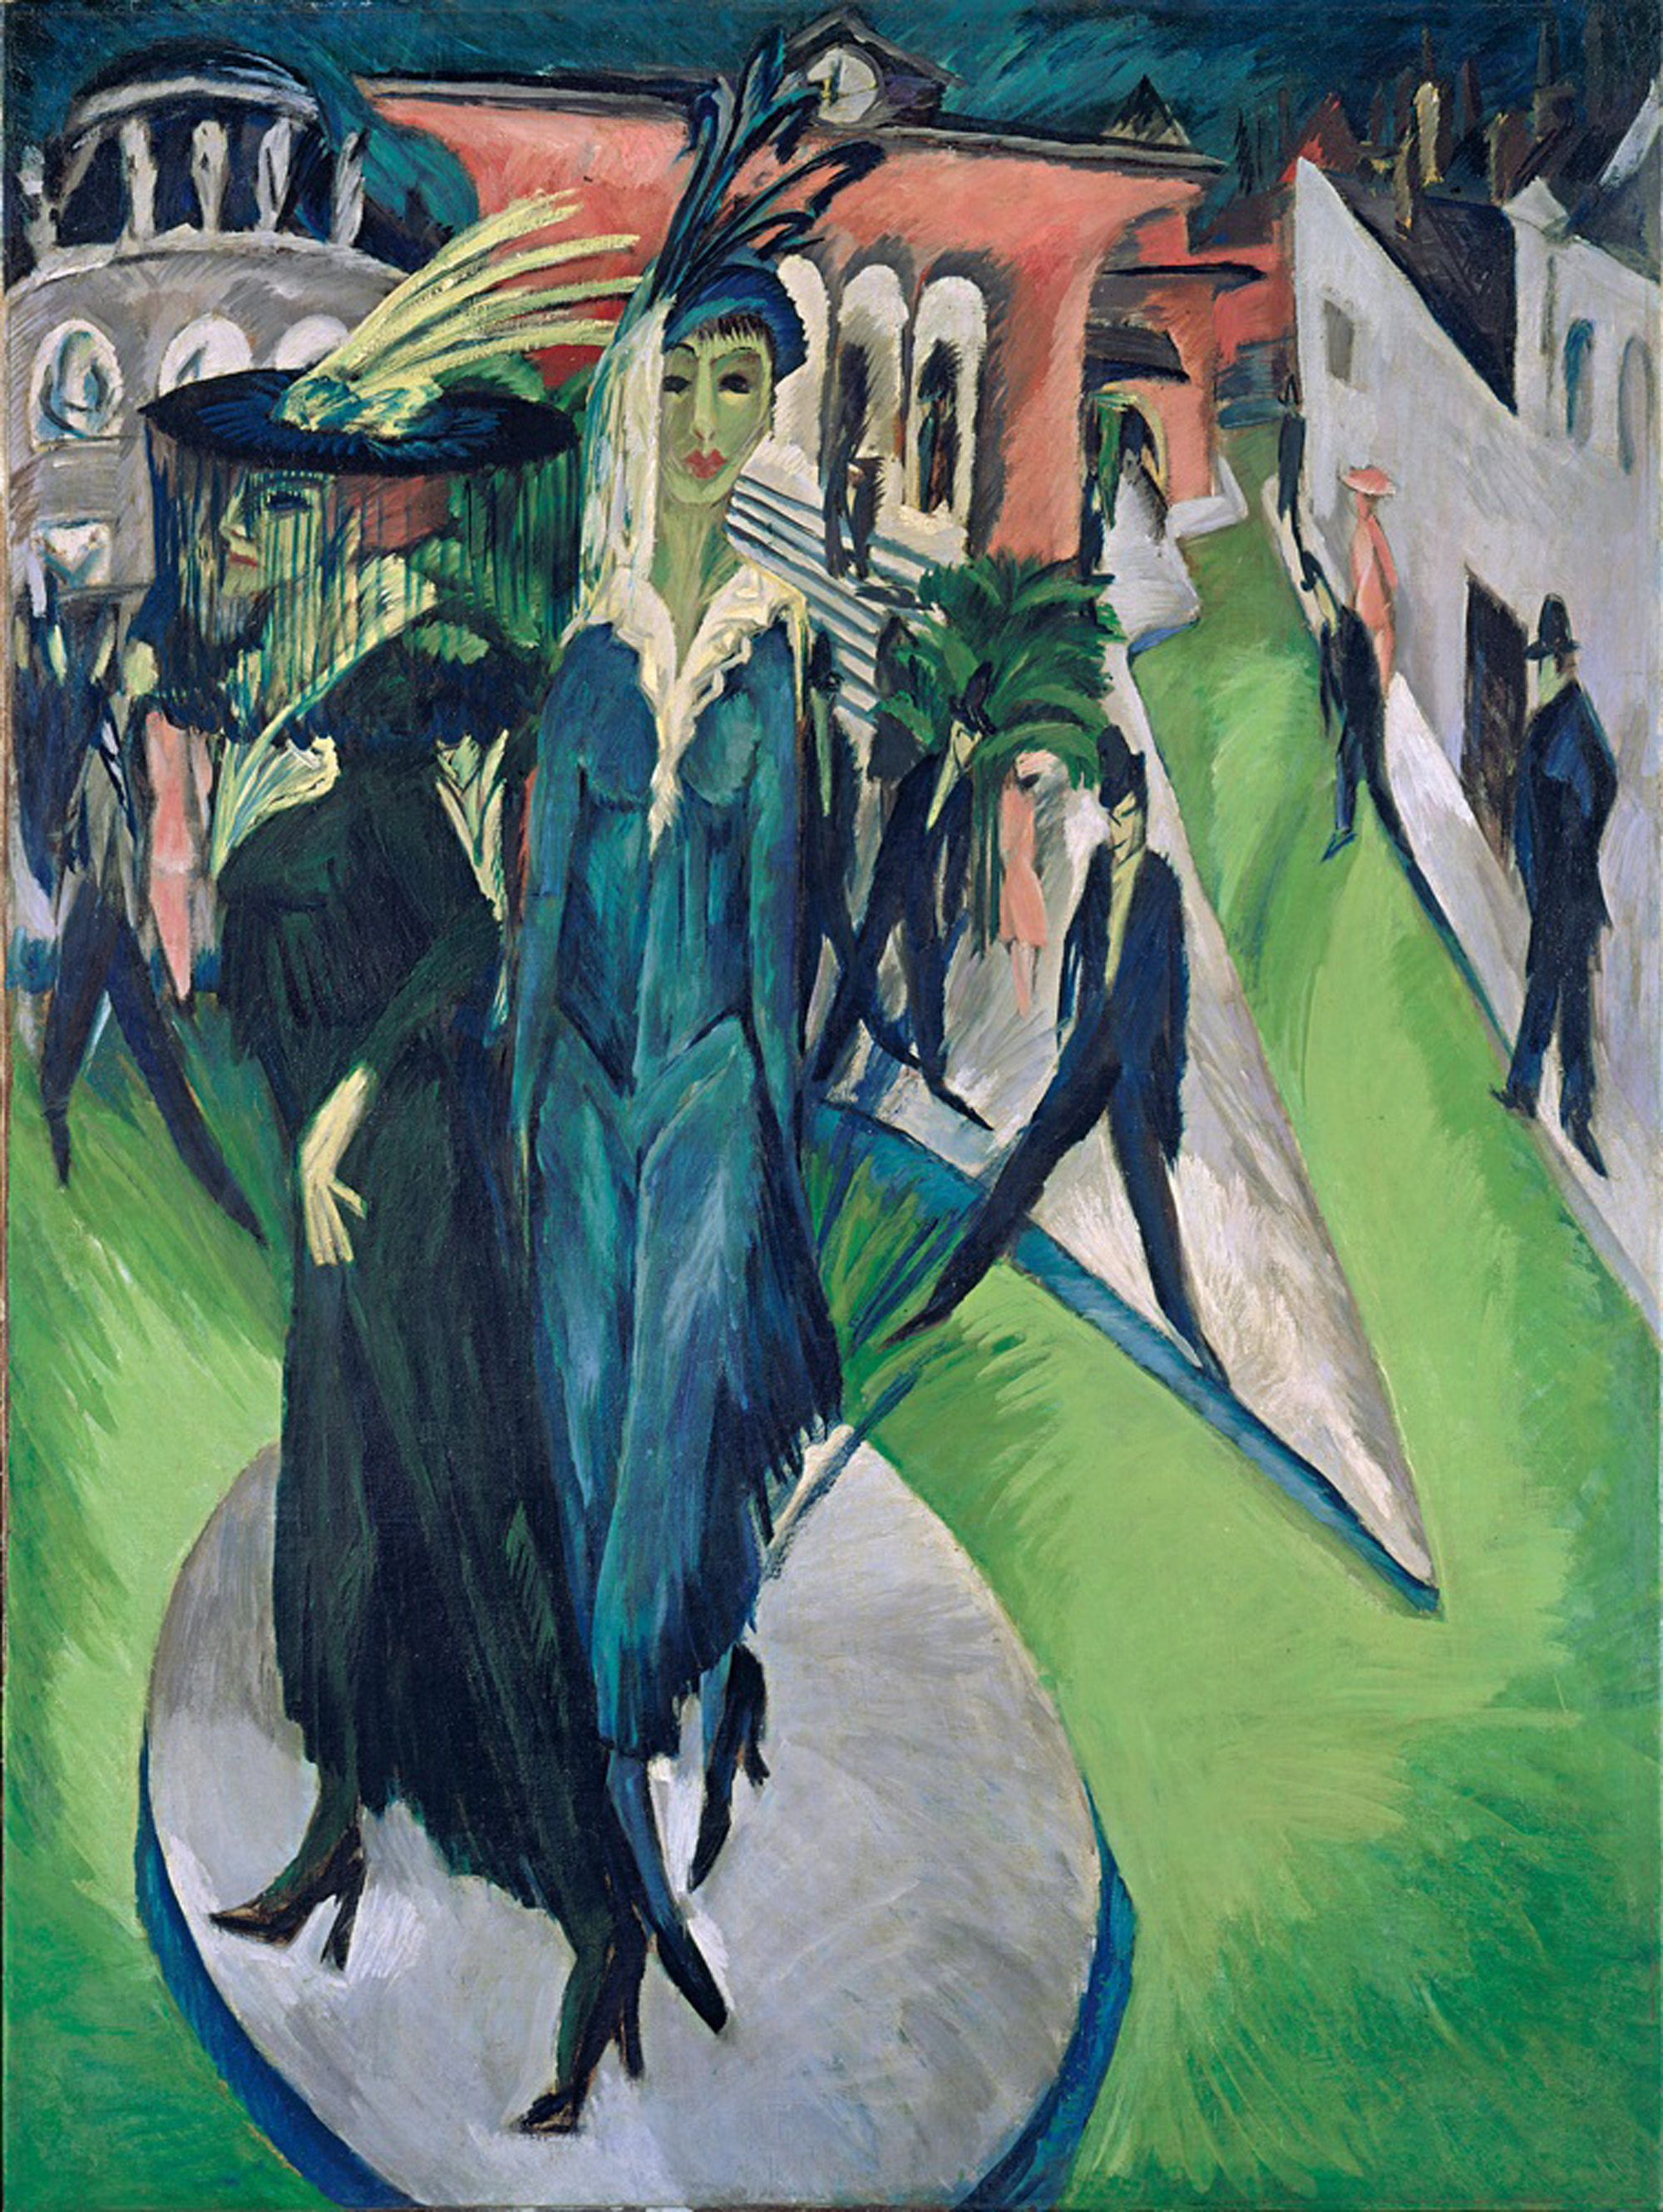 Ernst Ludwig Kirchner: Potsdamer Platz, 1914 | Öl auf Leinwand, 200 x 150 cm | © bpk / Staatliche Museen zu Berlin, Nationalgalerie / Jörg P. Anders